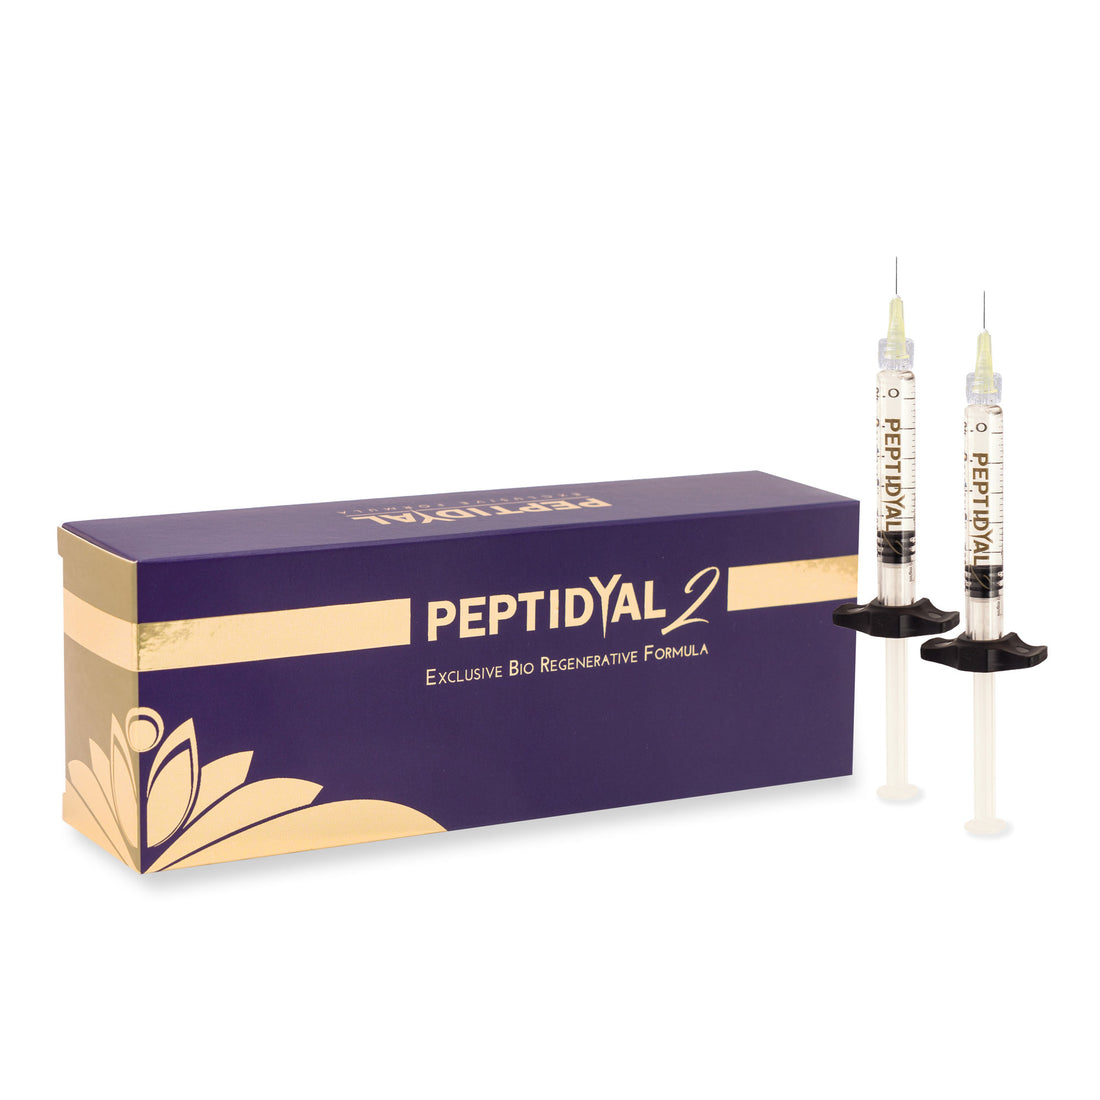 Peptidyal 2 - Αποκλειστική Bio Regenerative Formula